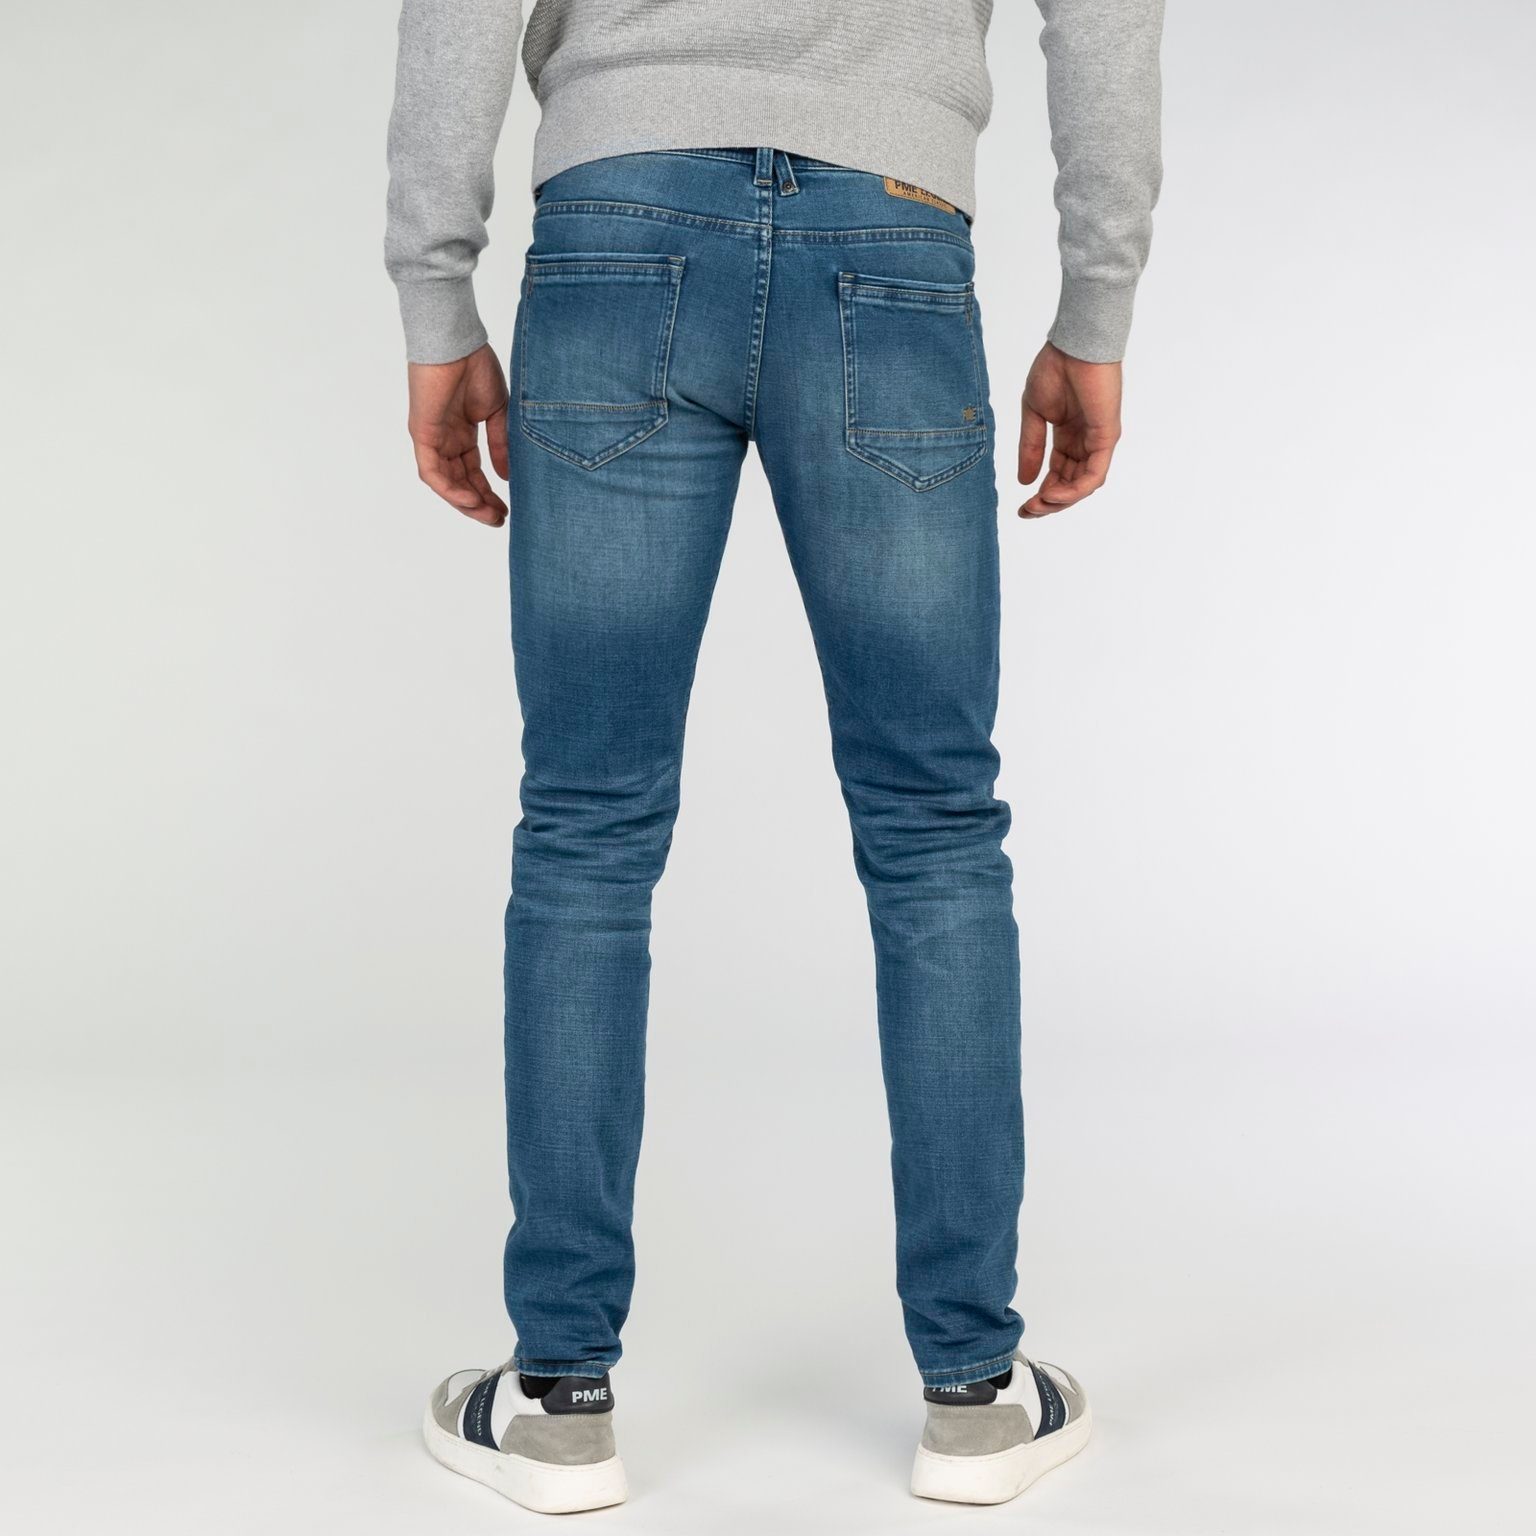 PME LEGEND TAILWHEEL 5-Pocket-Jeans blue mid LEGEND PTR140-SMB soft PME